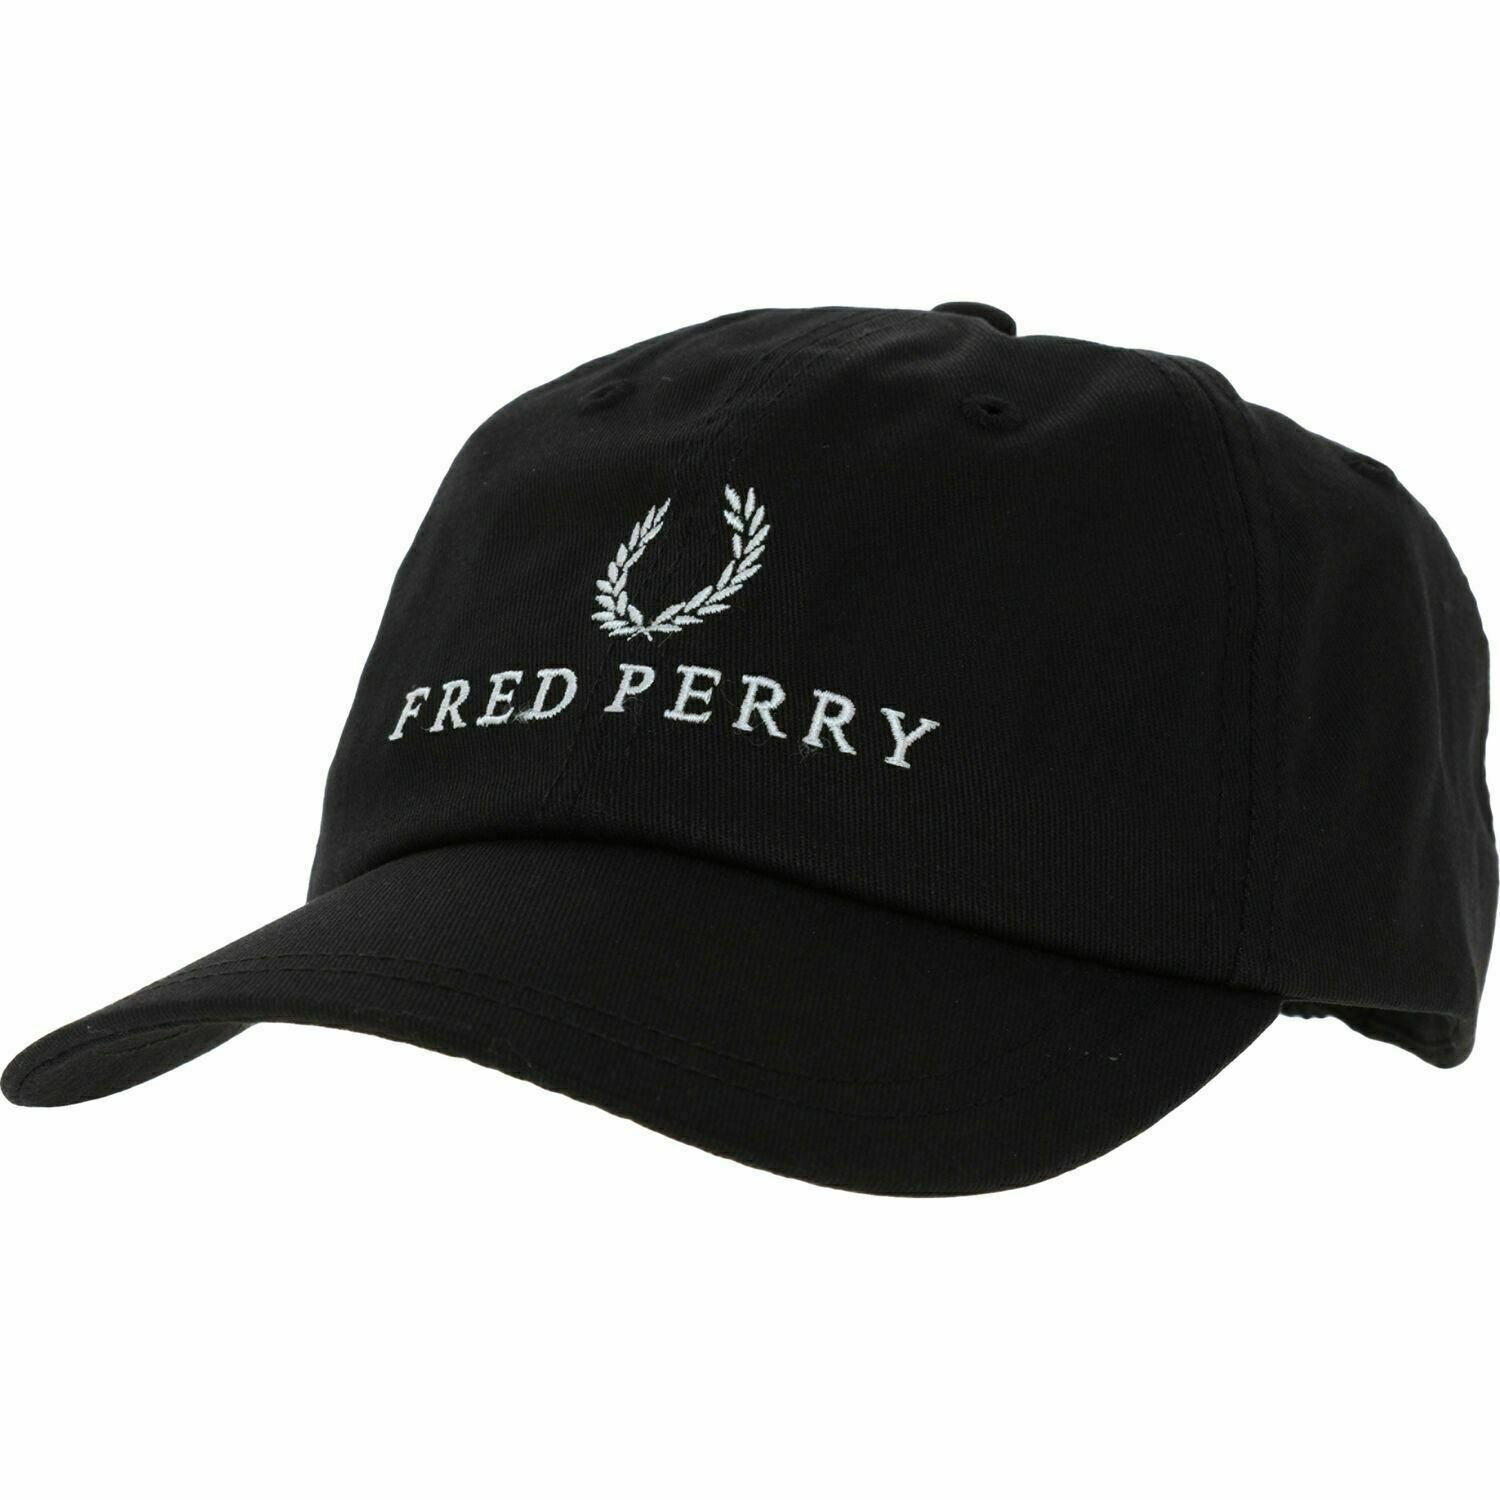 FRED PERRY Men's Black Tennis Cap Hat, White Logo